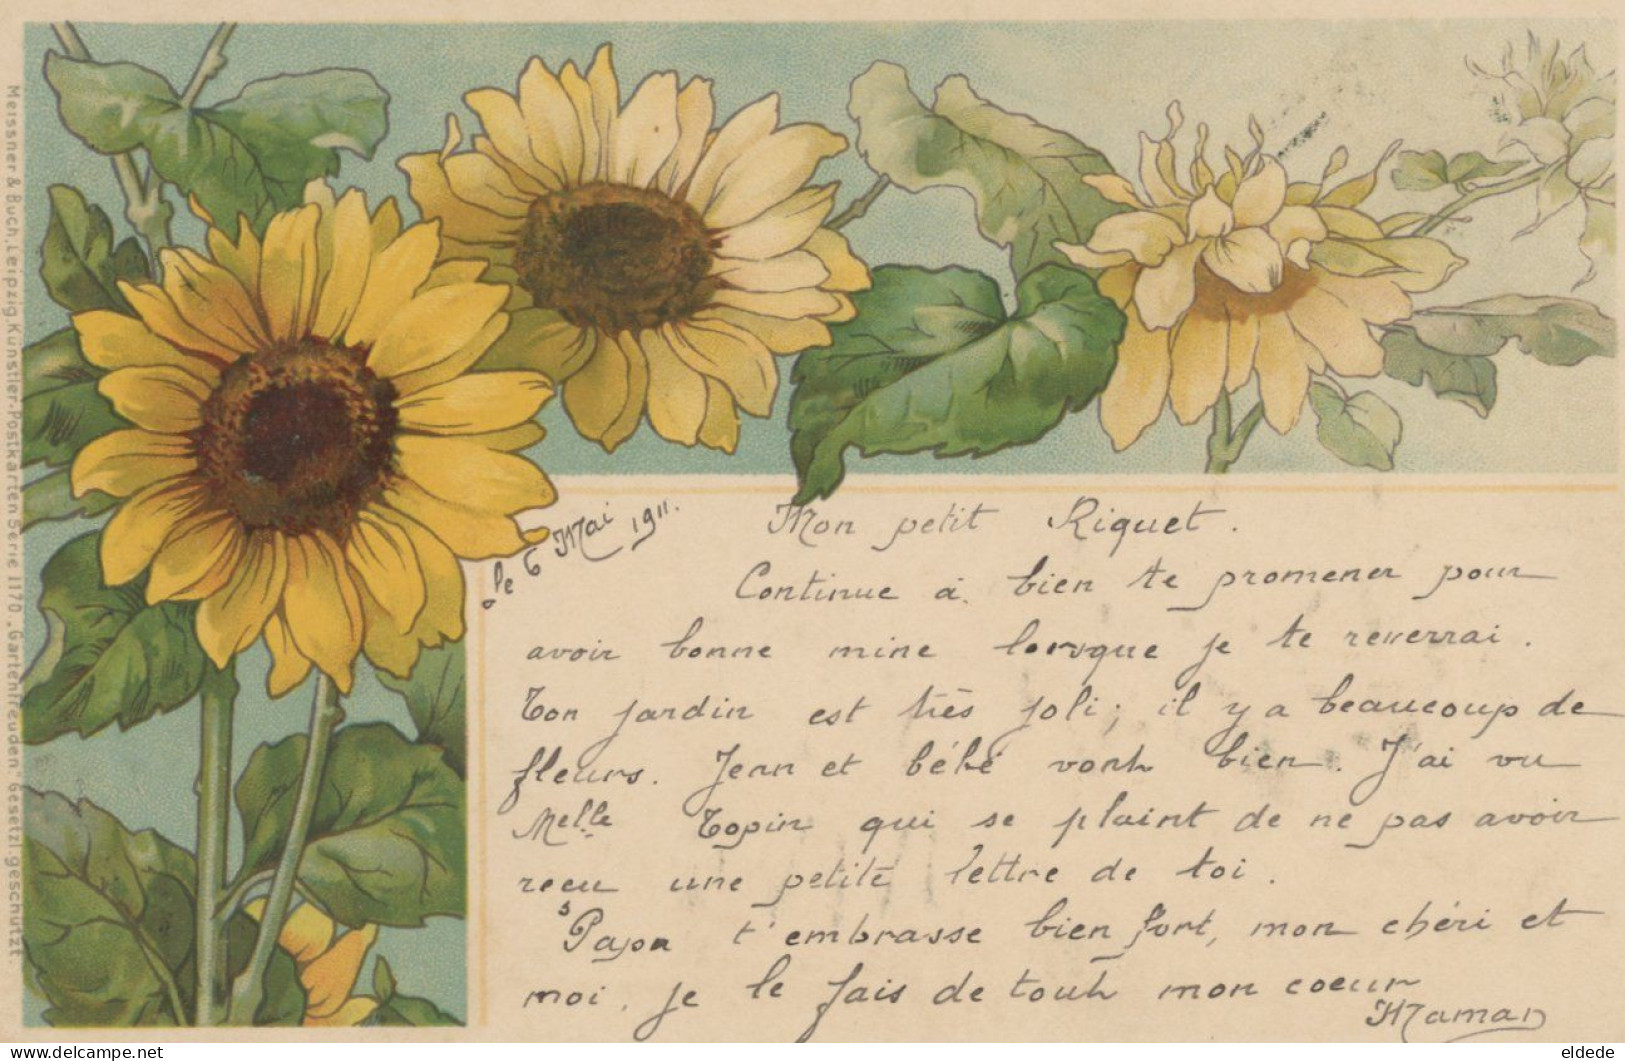 Pioneer Card Art Nouveau Sunflower Fleur De Tournesol Meissner And Buch - Vor 1900